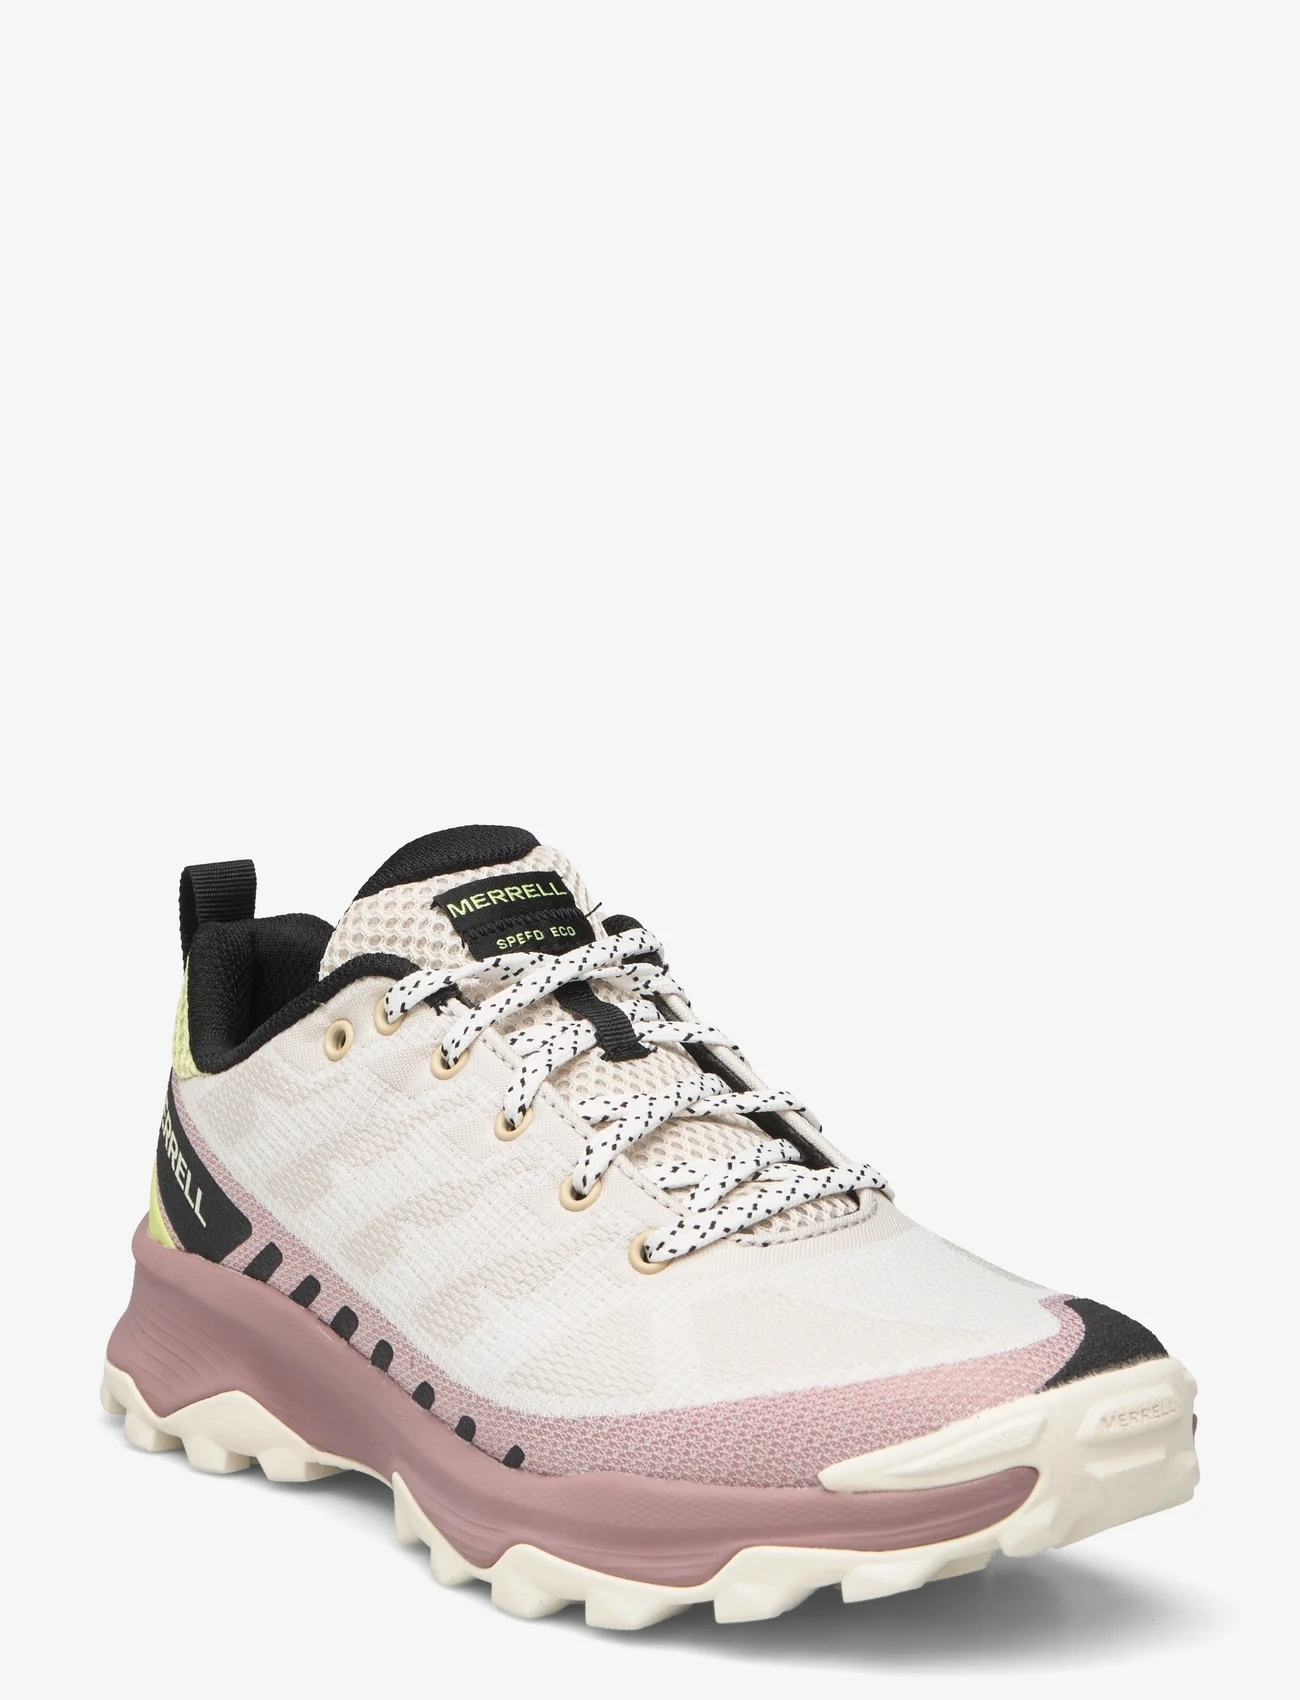 Merrell - Women's Speed Eco - Oyster/Burlwood - hiking shoes - oyster/burlwood - 0